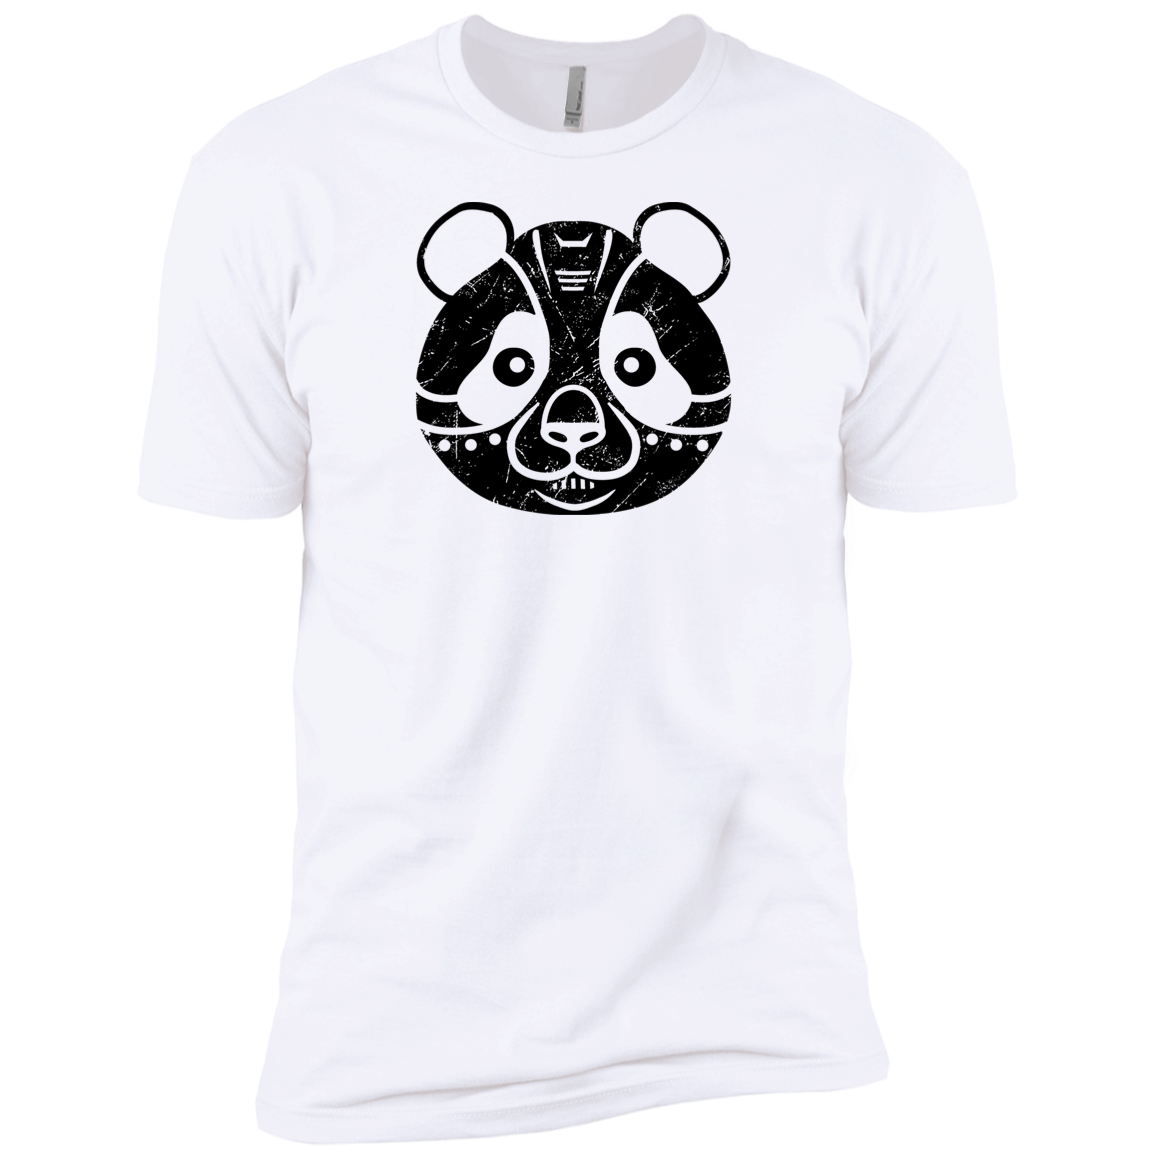 Black Distressed Emblem (Panda/Fuji) - Dark Corps